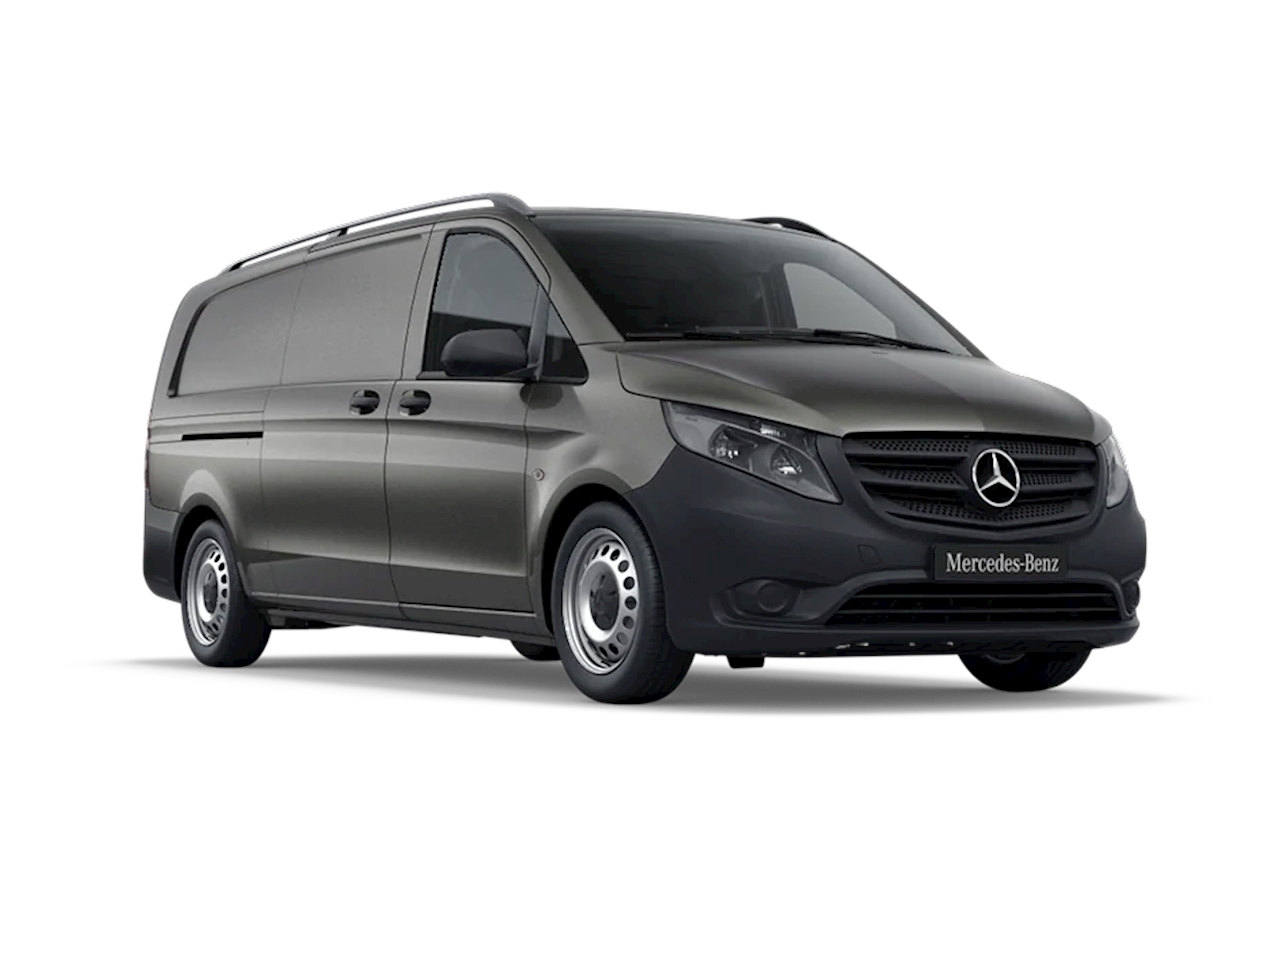 New Vito Van For Sale | Mercedes-Benz Vito Van Lease Deals | Van Sales UK